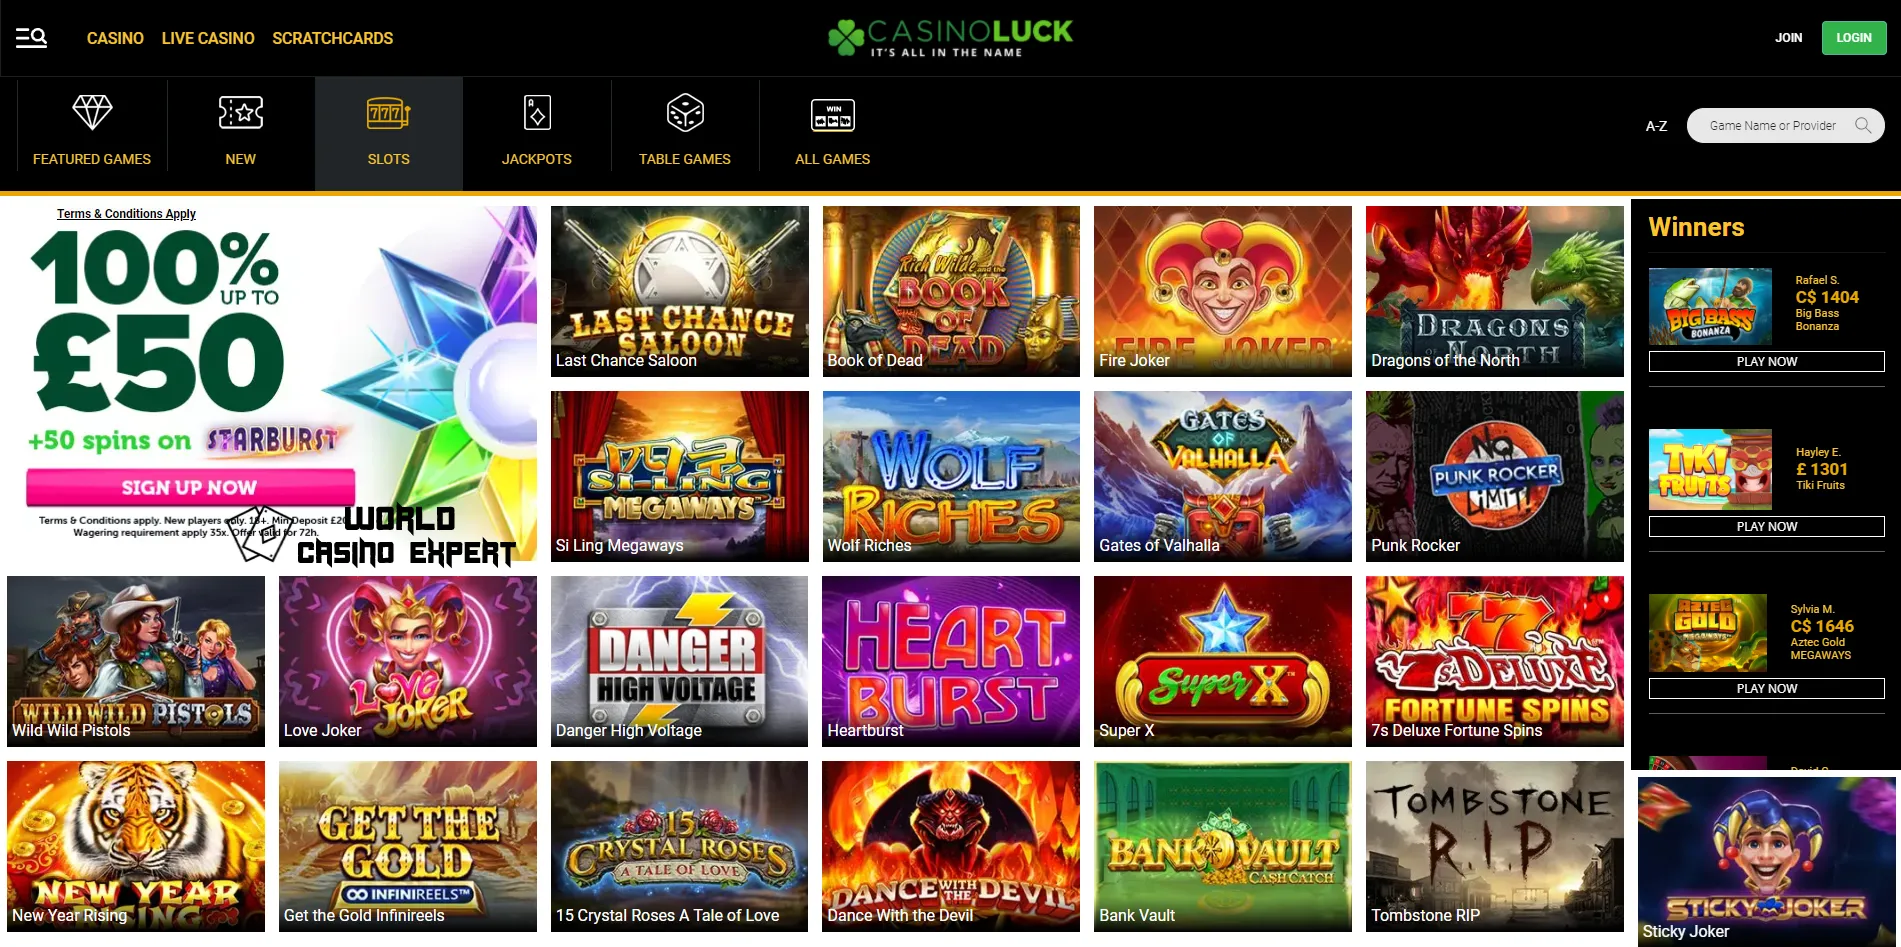 Games and Providers at CasinoLuck | World Casino Expert